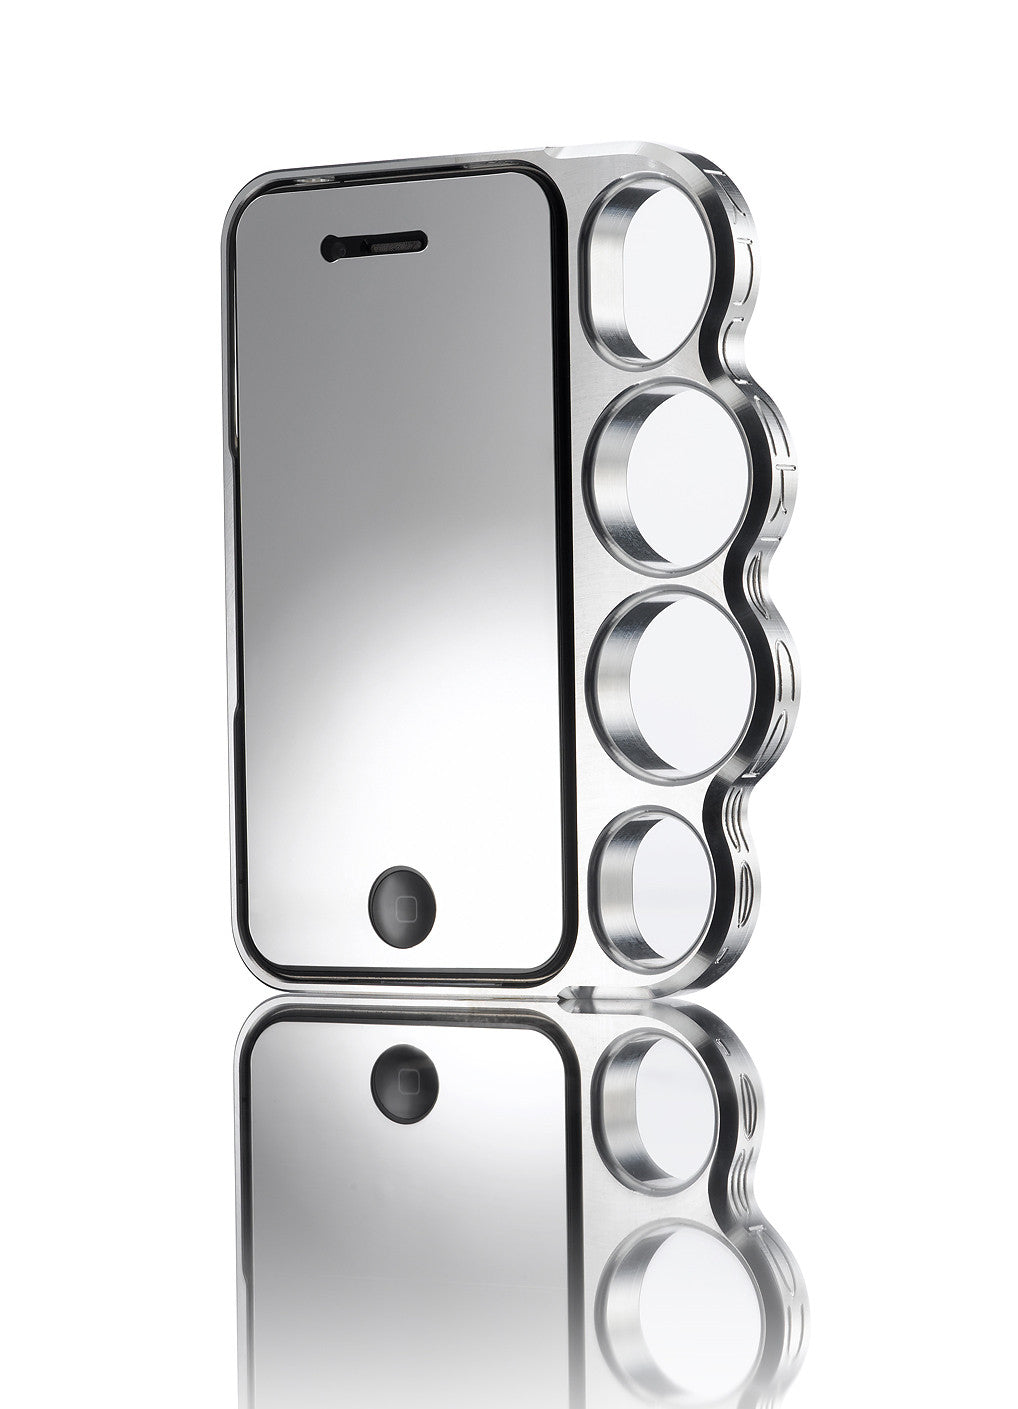 knuckle case - aluminum, cell phone, Iphone case, brass knuckles, phone  handle, brass knuckle iphone case, brass knuckles iphone case